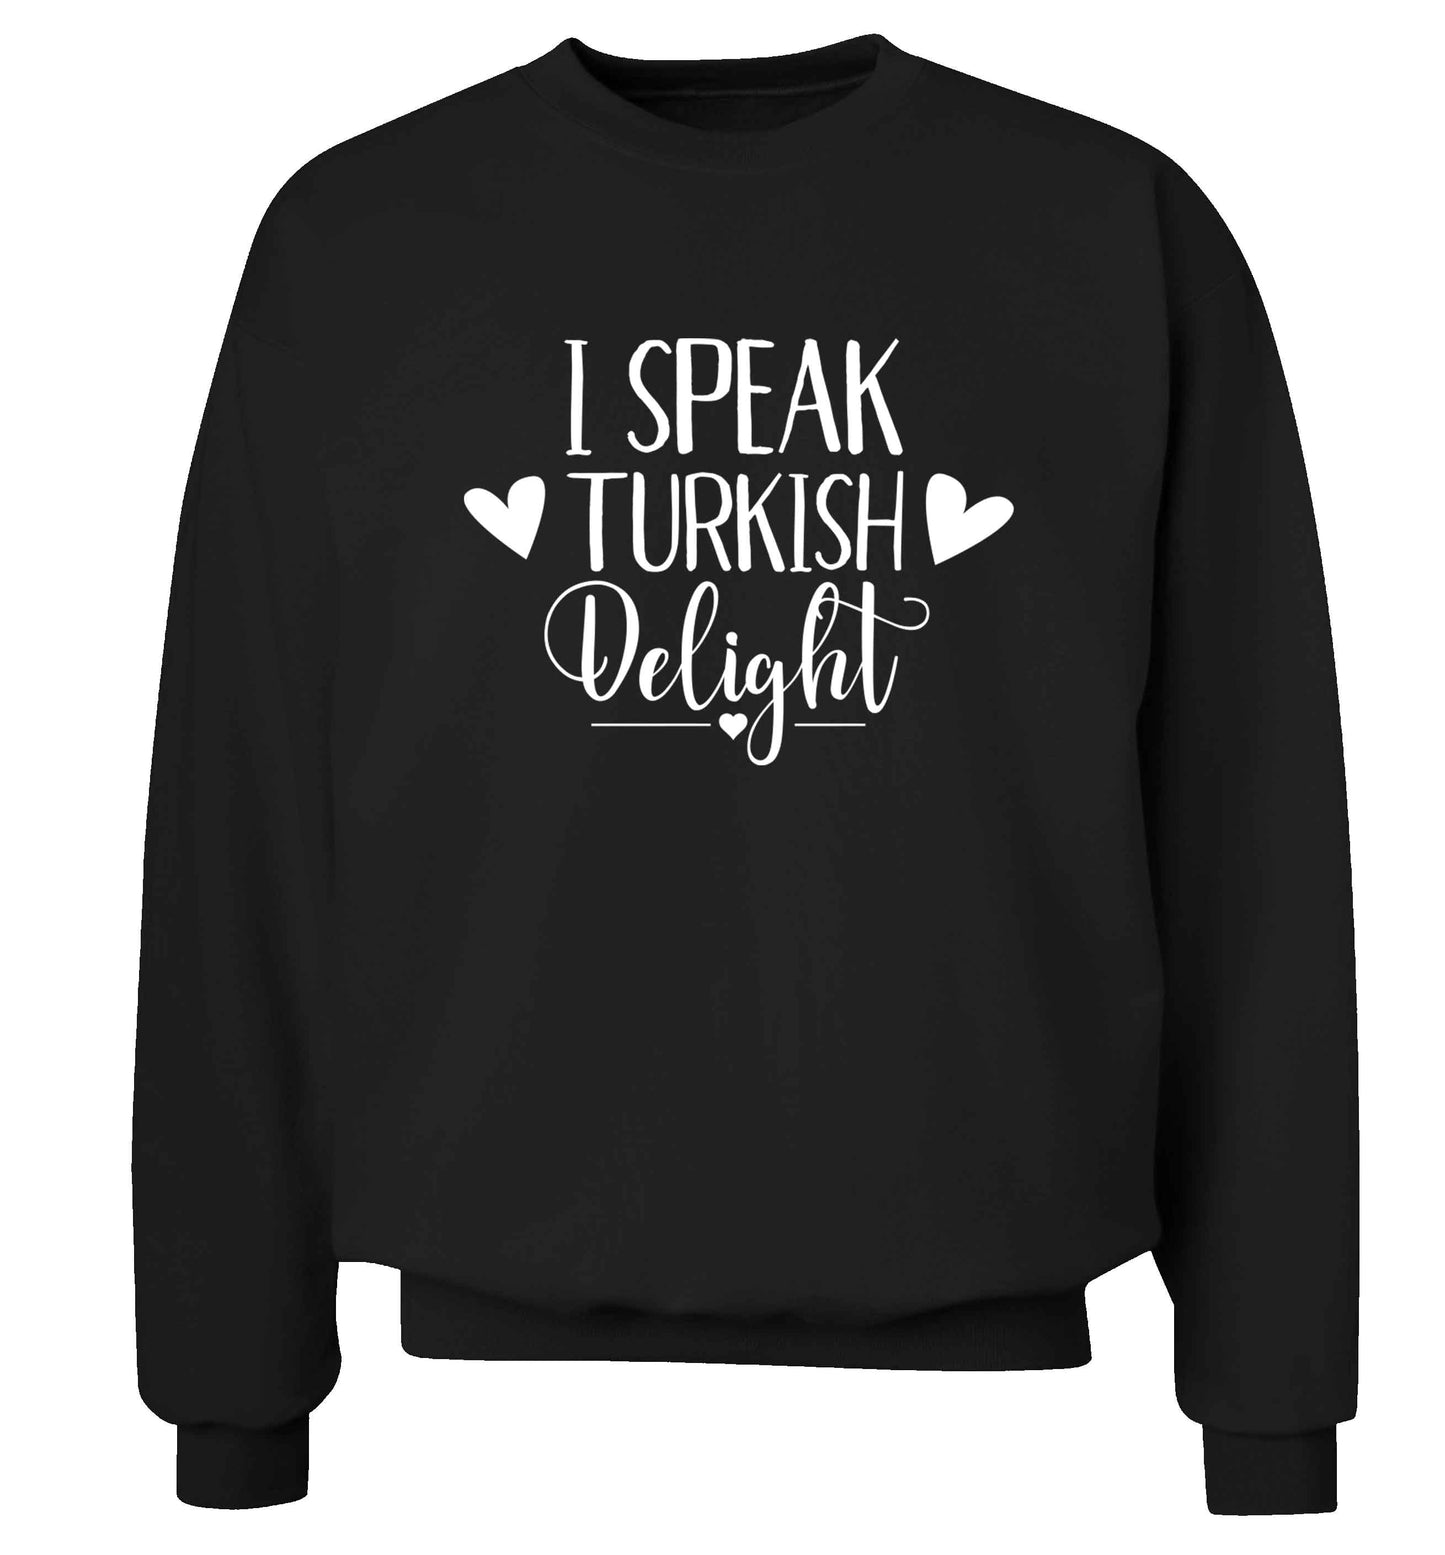 I speak turkish...delight Adult's unisex black Sweater 2XL